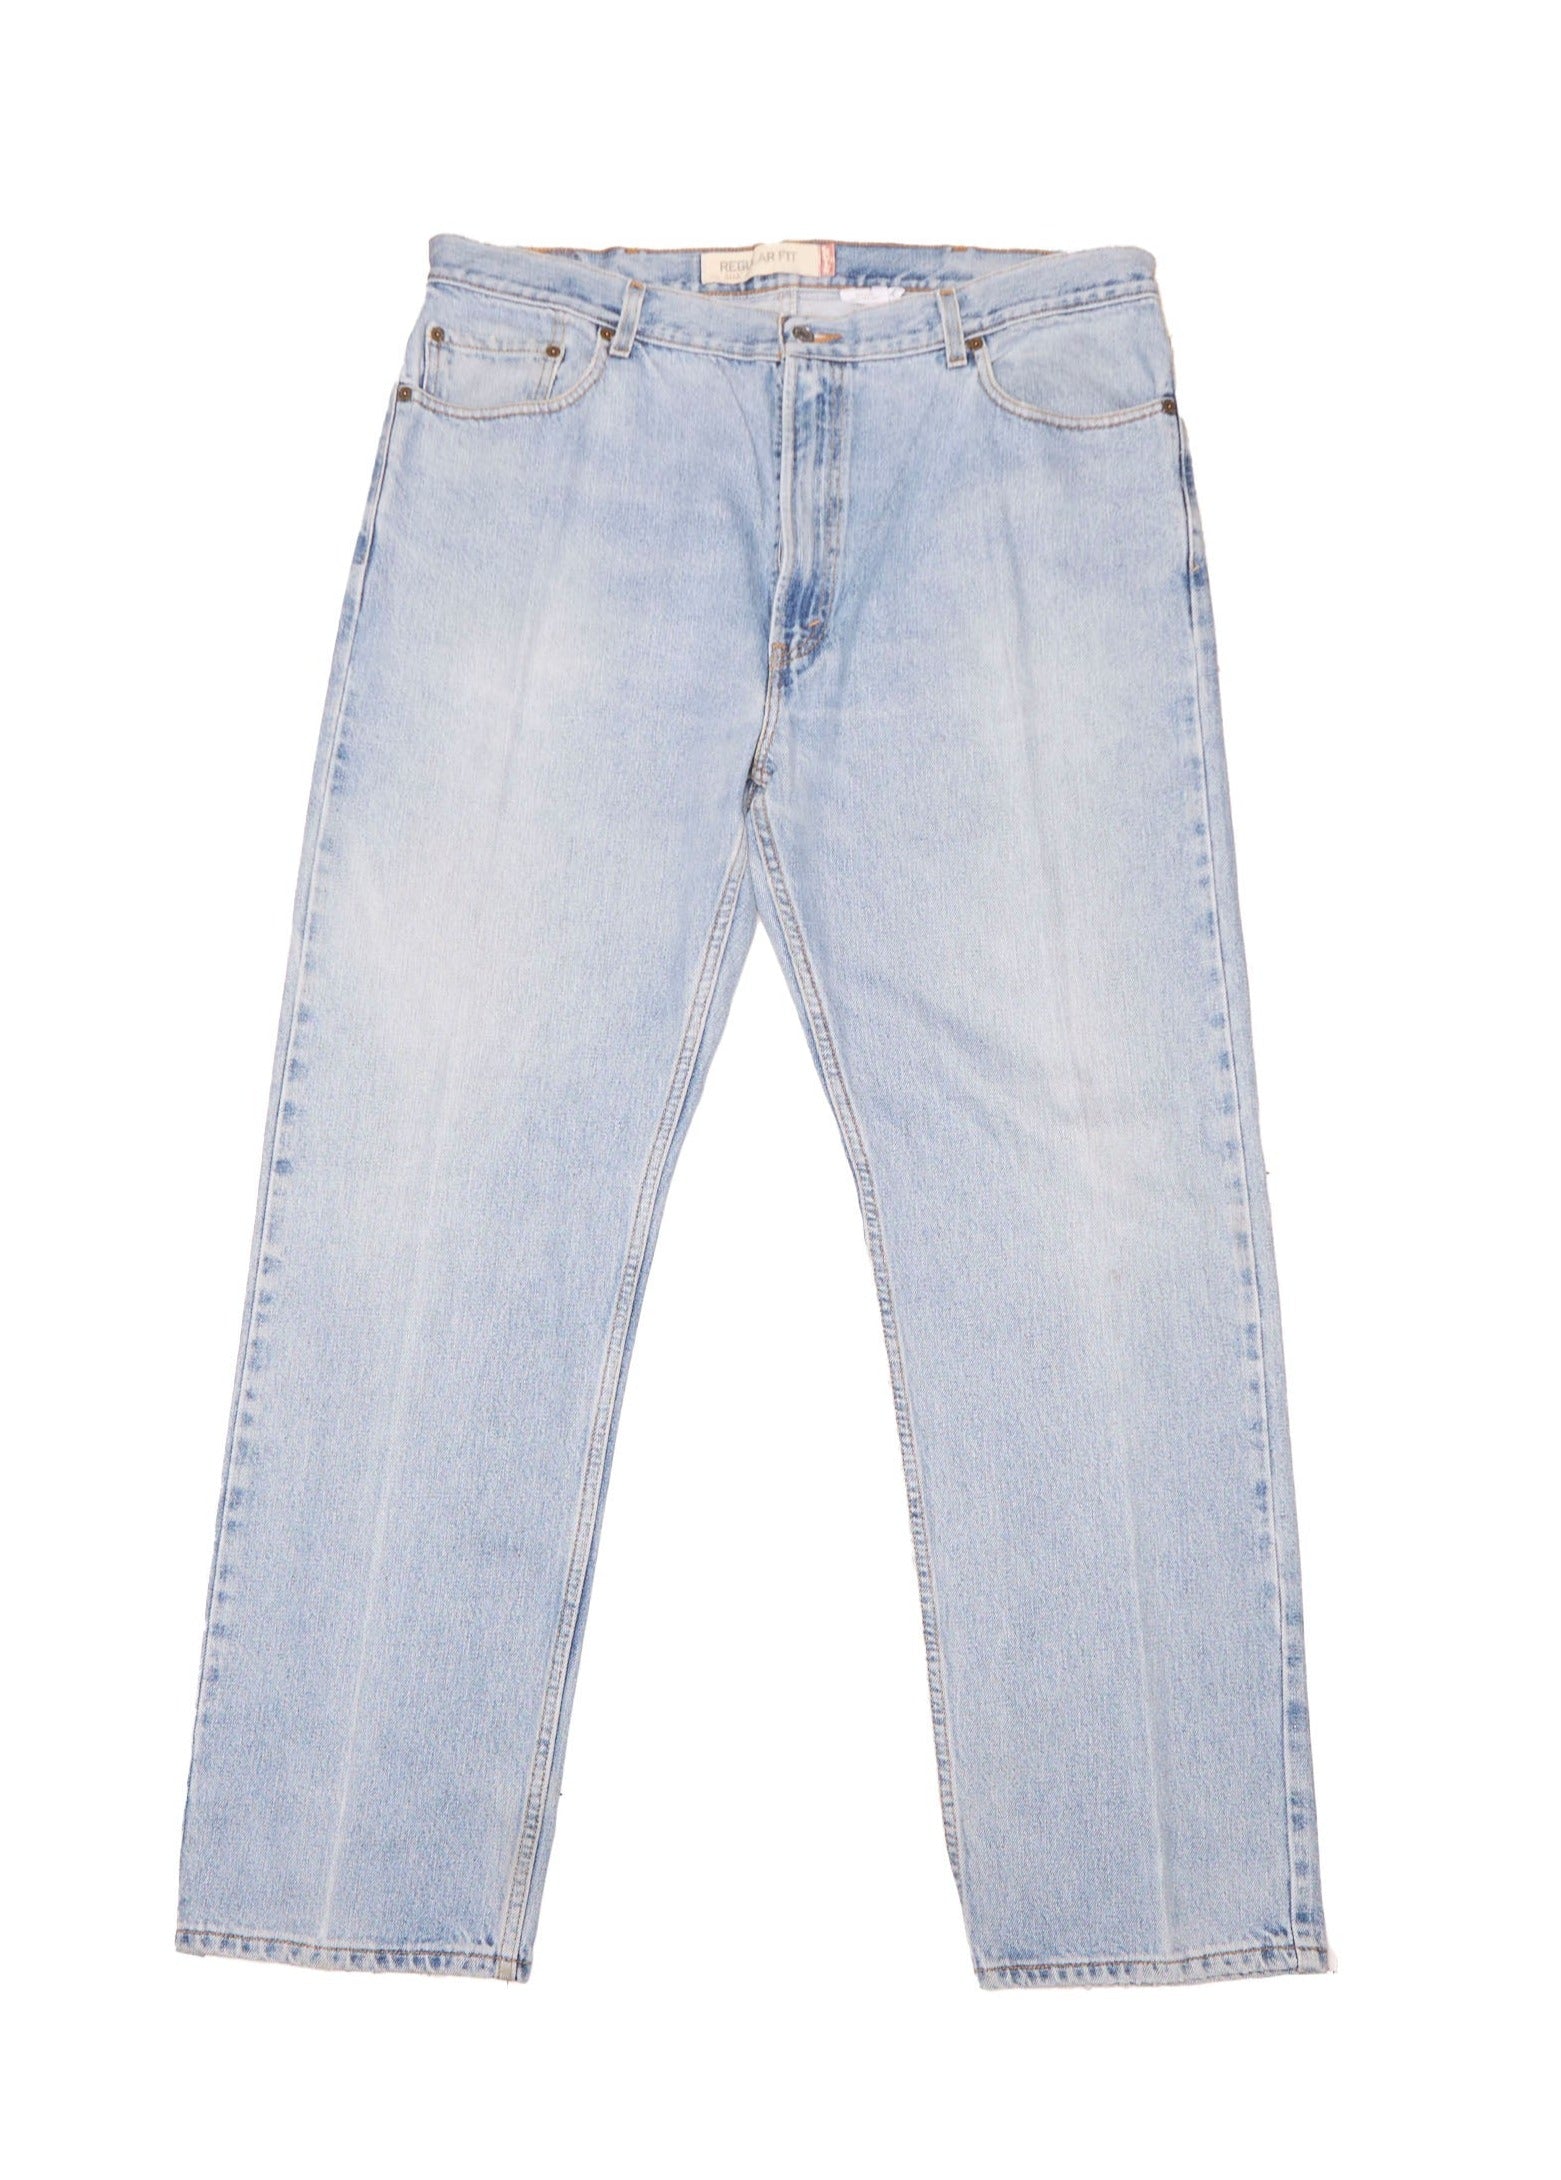 Levi's 501 Jeans - W32